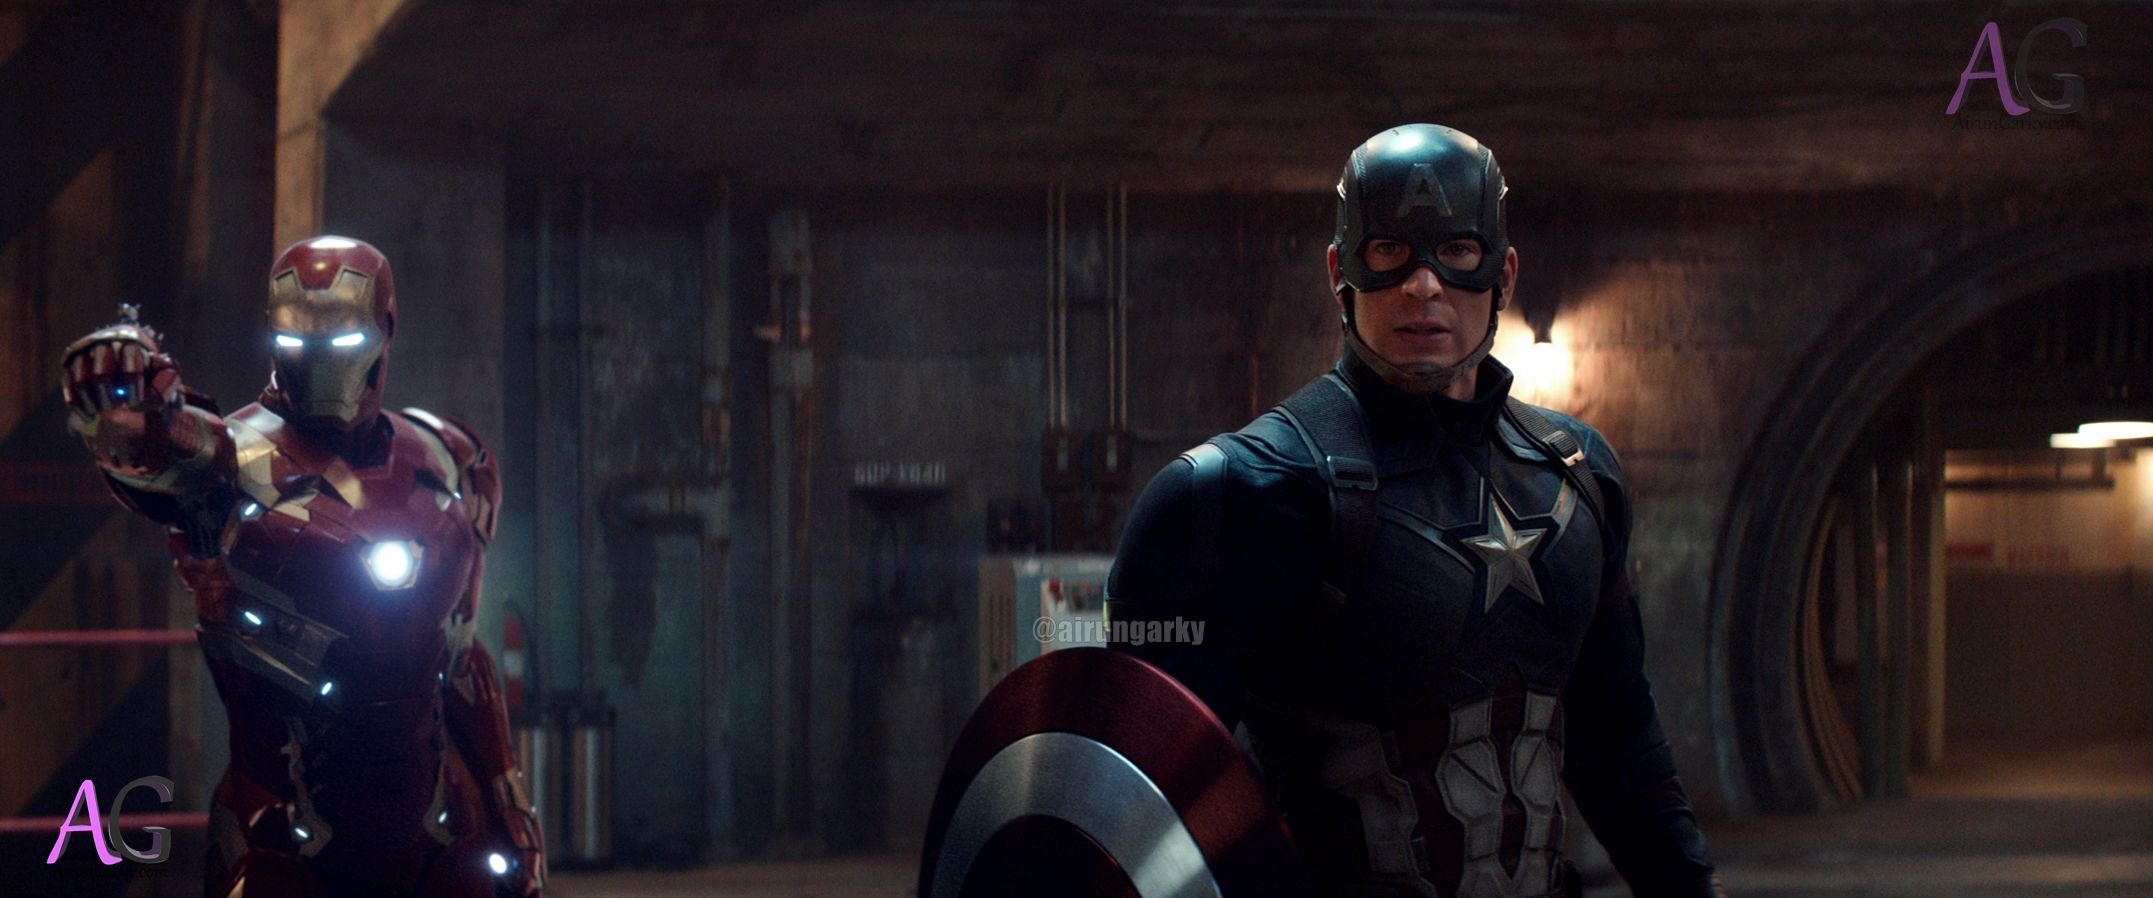 Marvel's Captain America: Civil War L to R: Iron Man/Tony Stark (Robert Downey Jr.) and Steve Rogers/Captain America (Chris Evans) Photo Credit: Film Frame © Marvel 2016